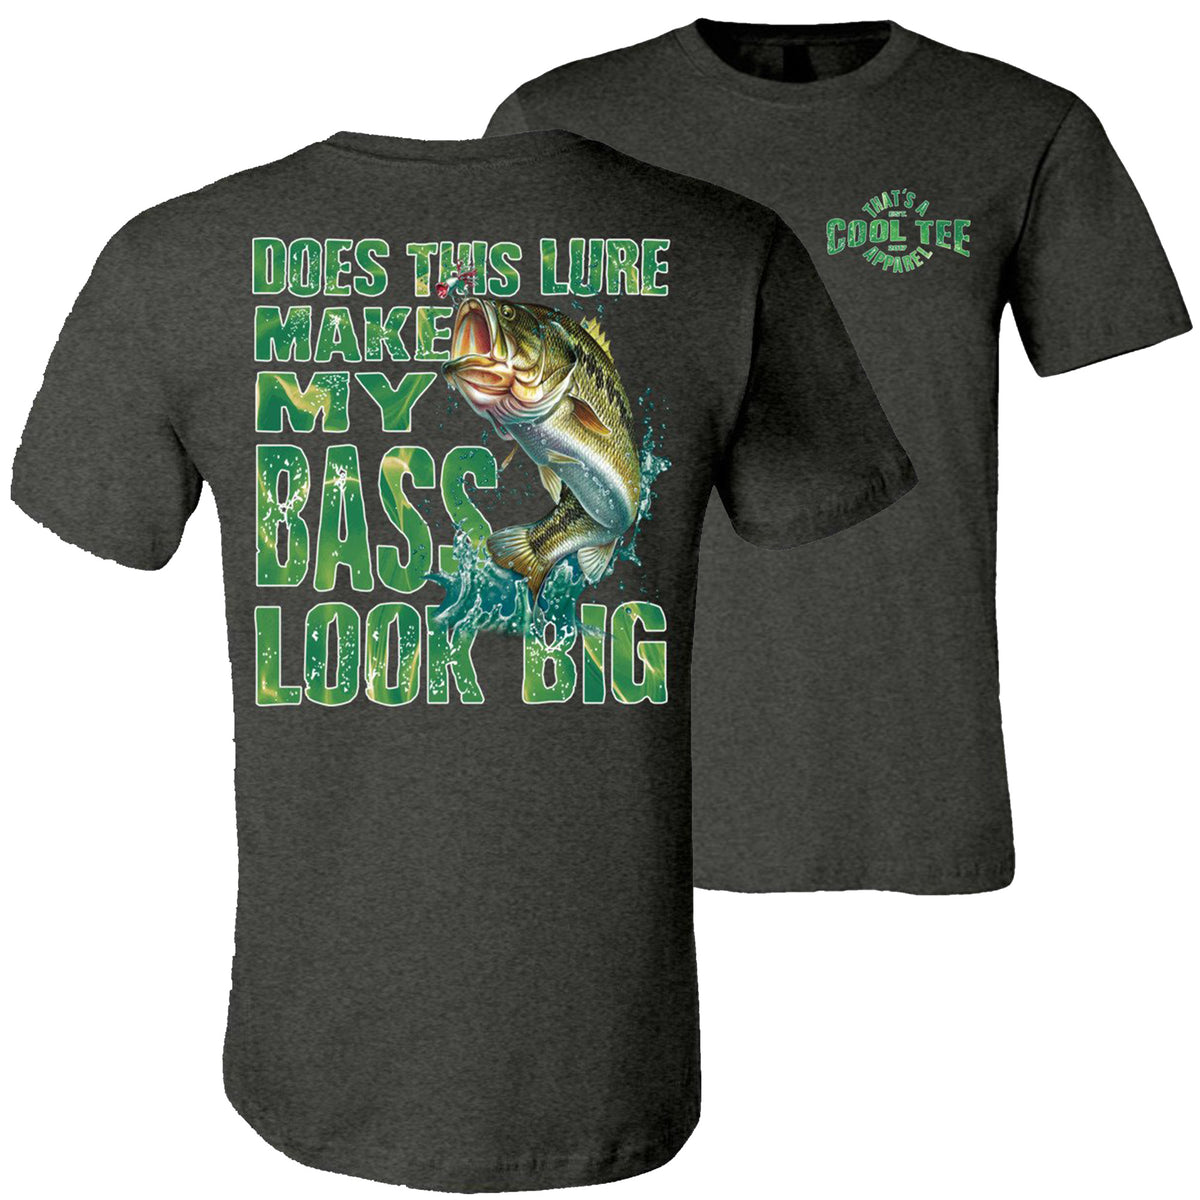 Largemouth Bass and Fishing Lure T-Shirt Heather Dust / 2XL